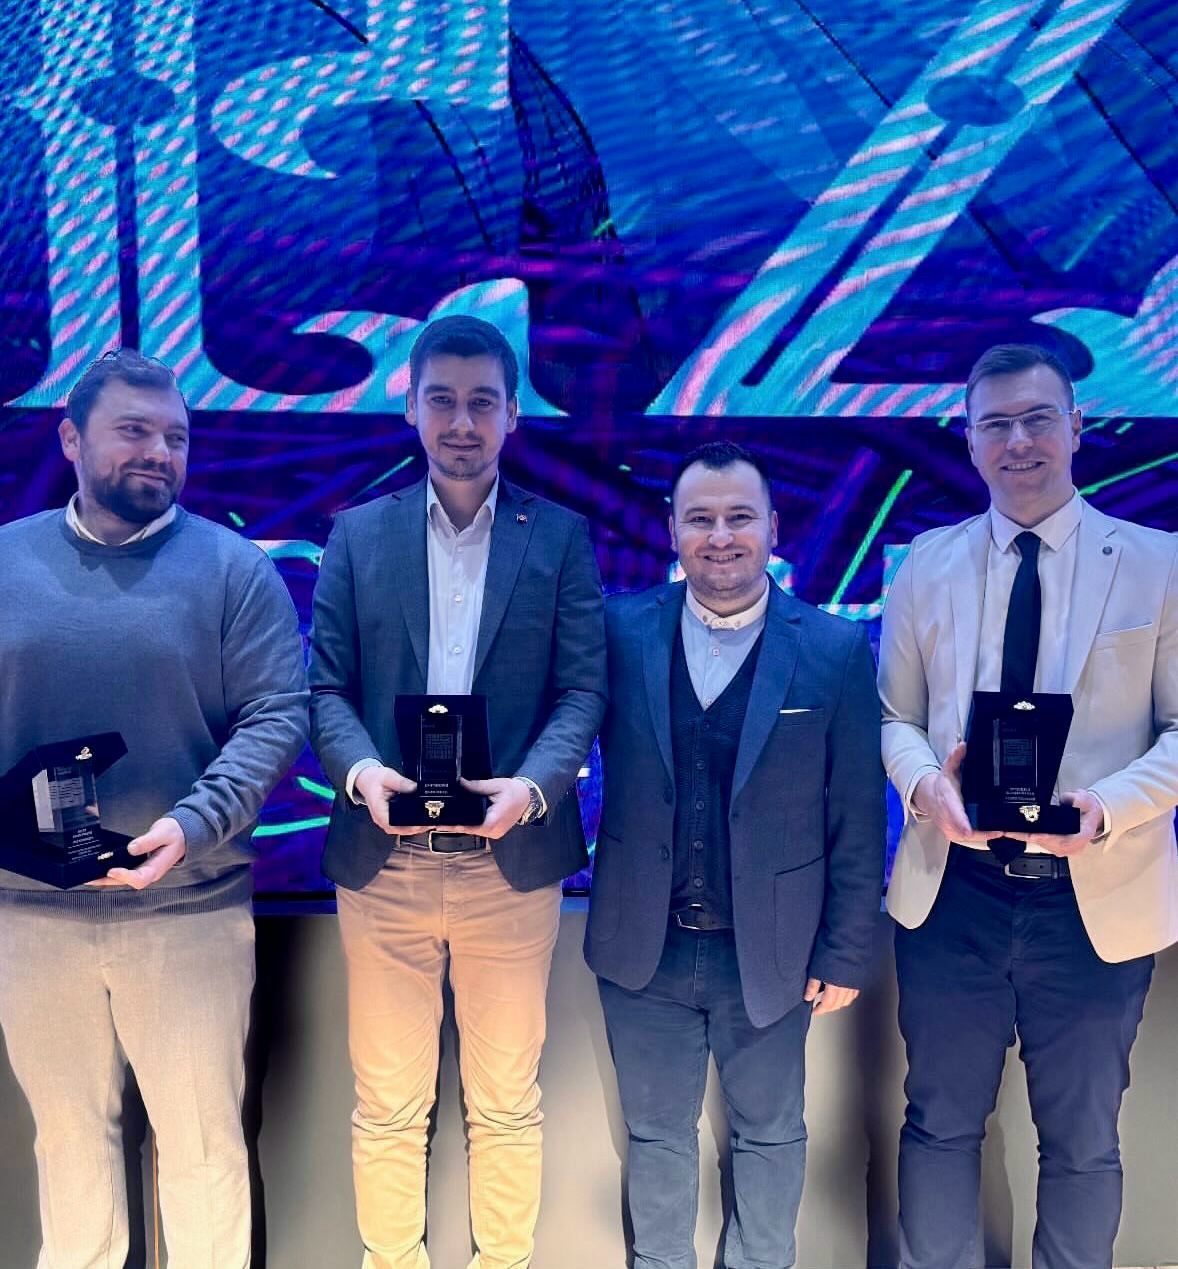 Quark Optical Won The Best Entrepreneur Award!